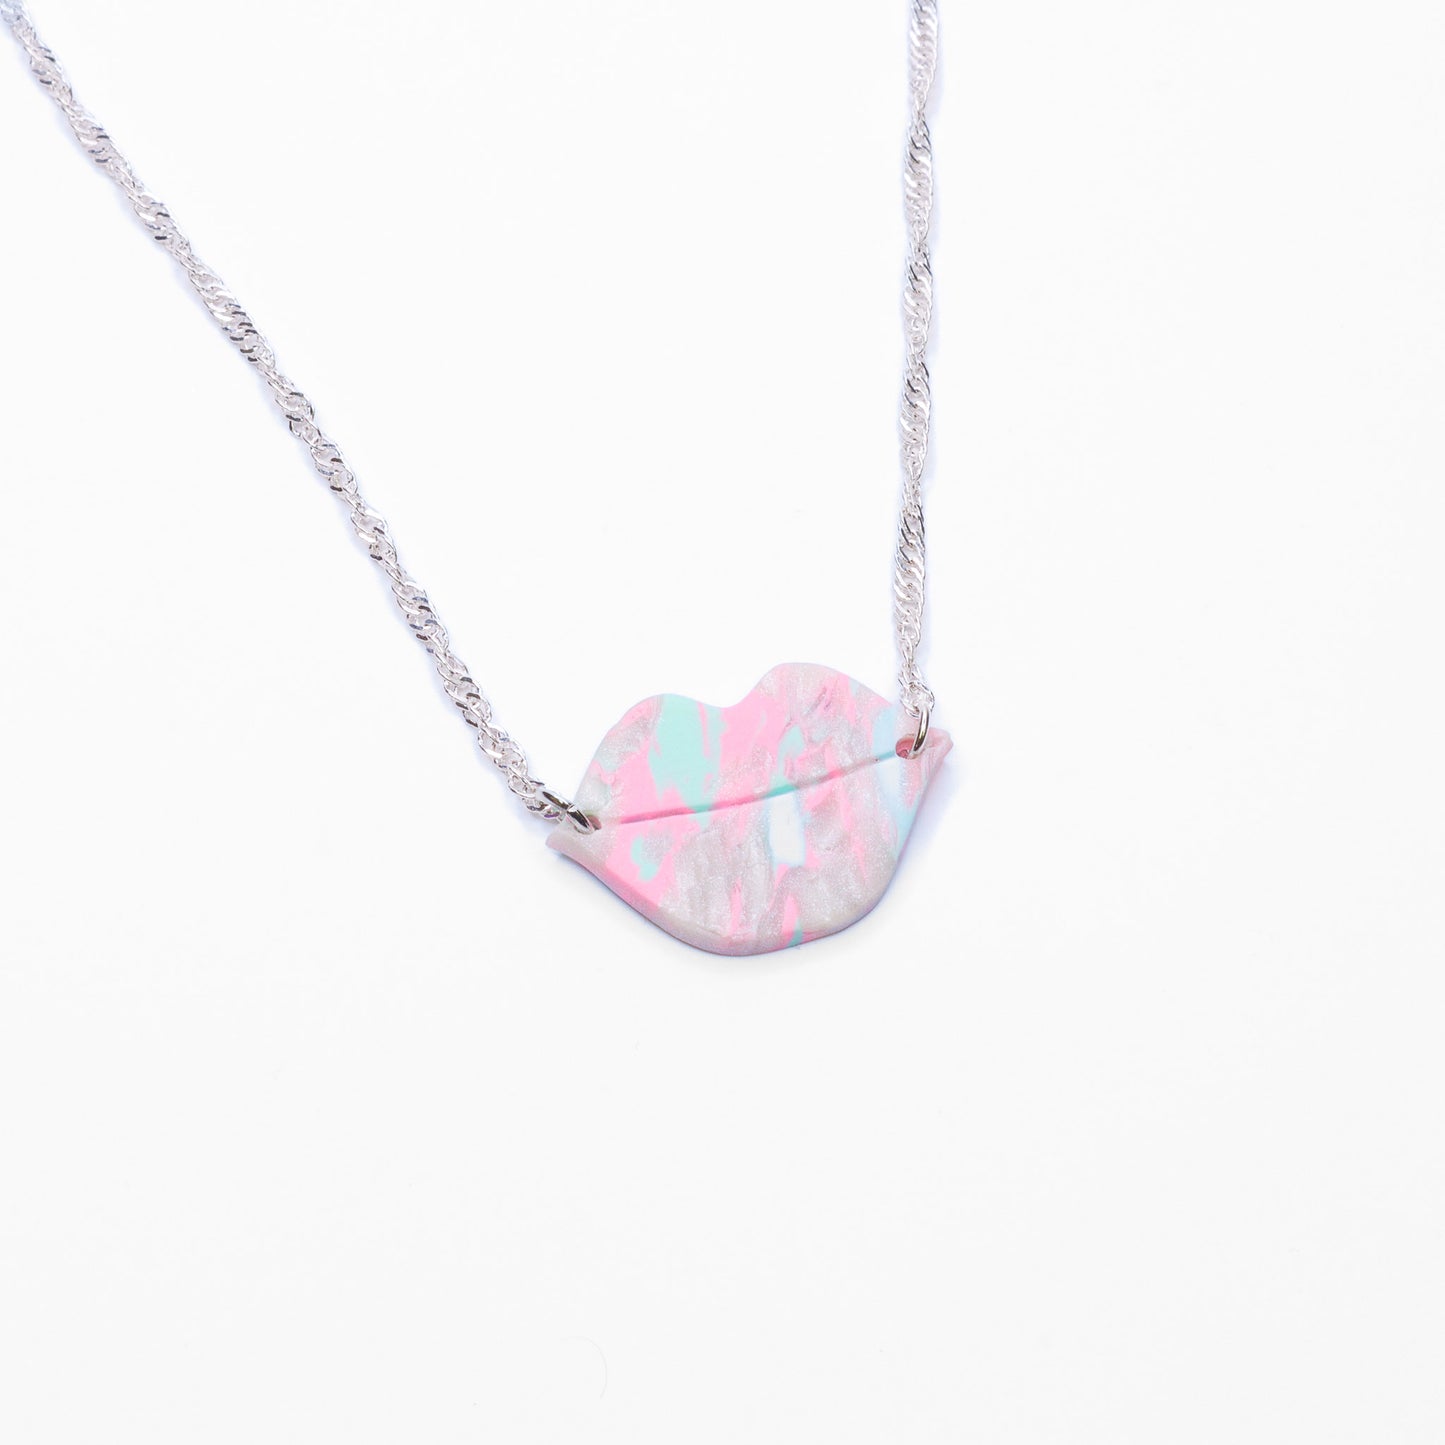 Kiss Necklace - Pink & Mint